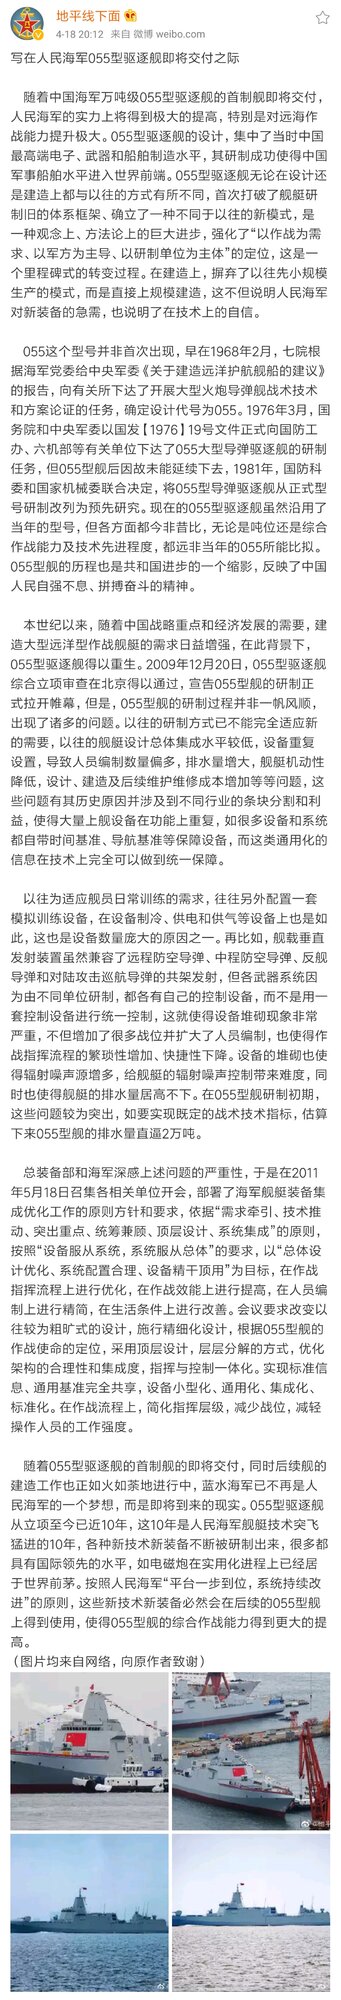 Screenshot_2019-04-18-20-17-55-854_com.sina.weibo.jpg